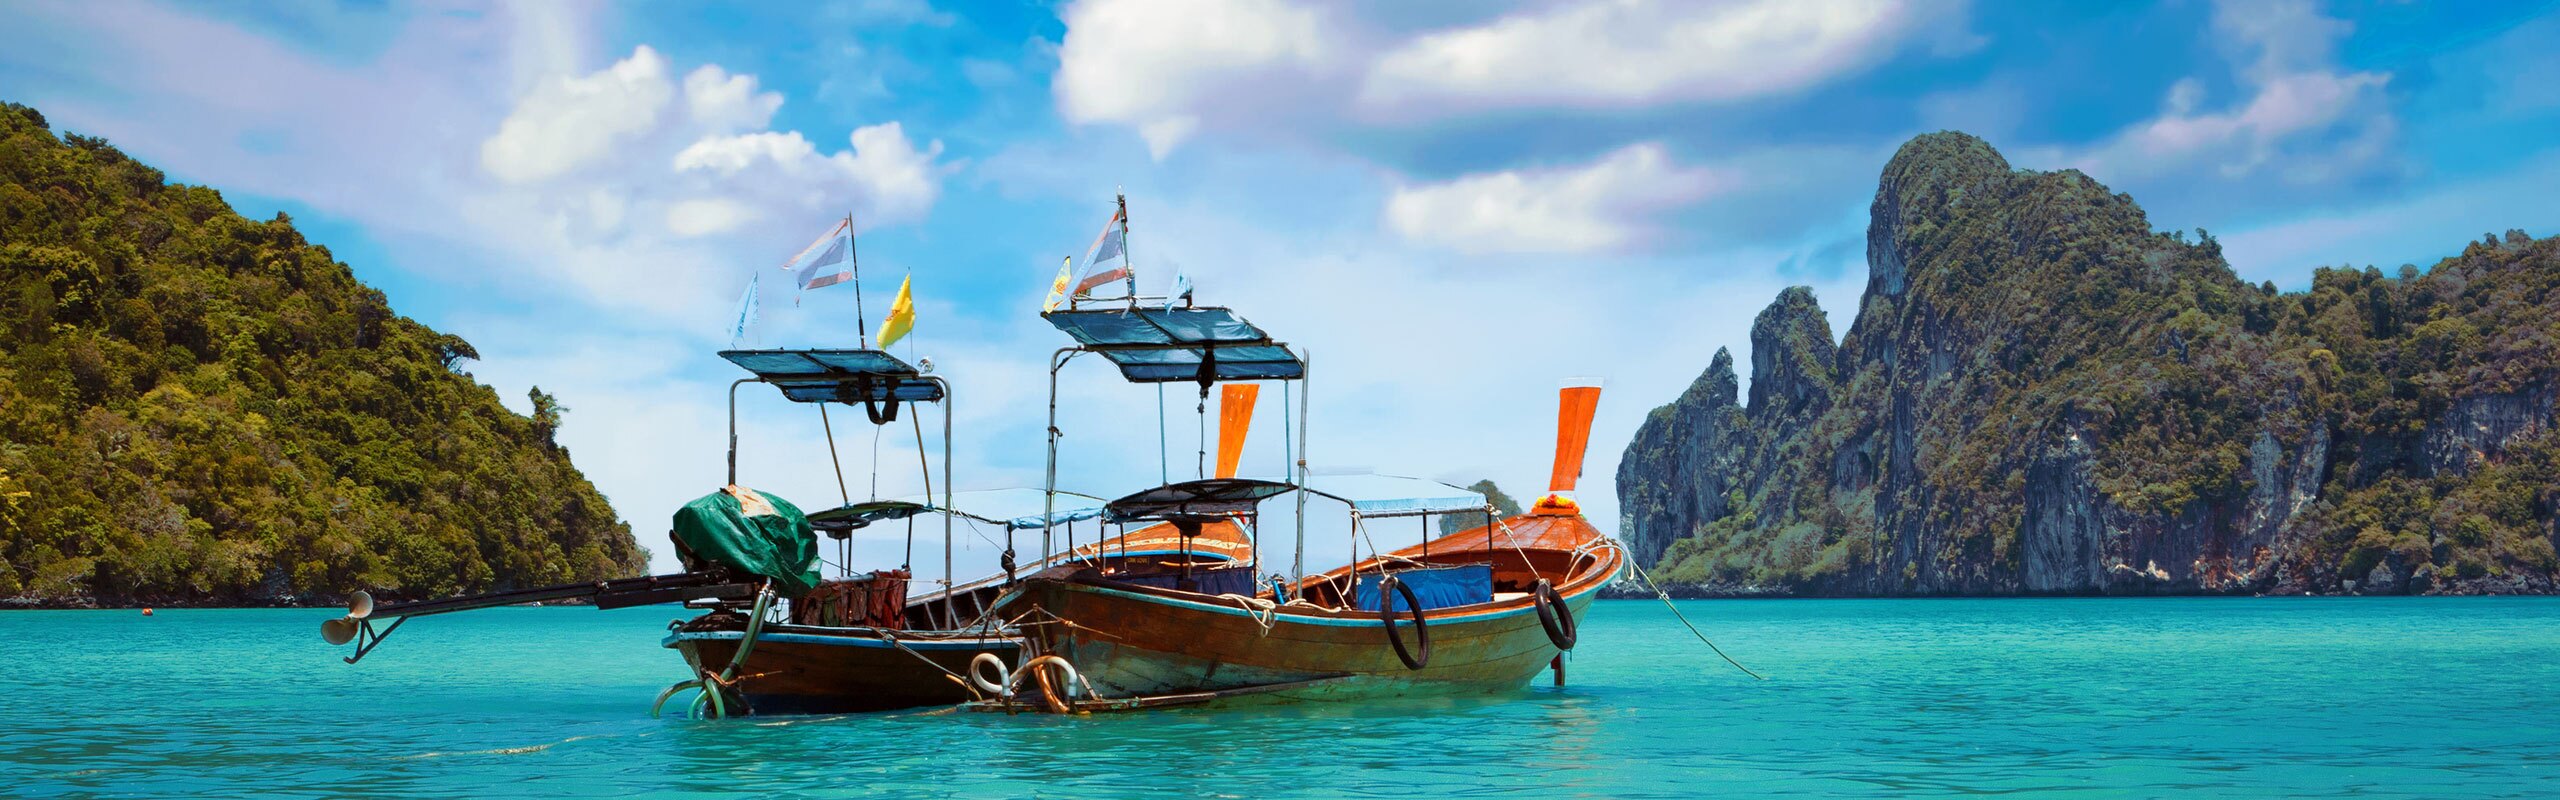 Thailand Island Tours